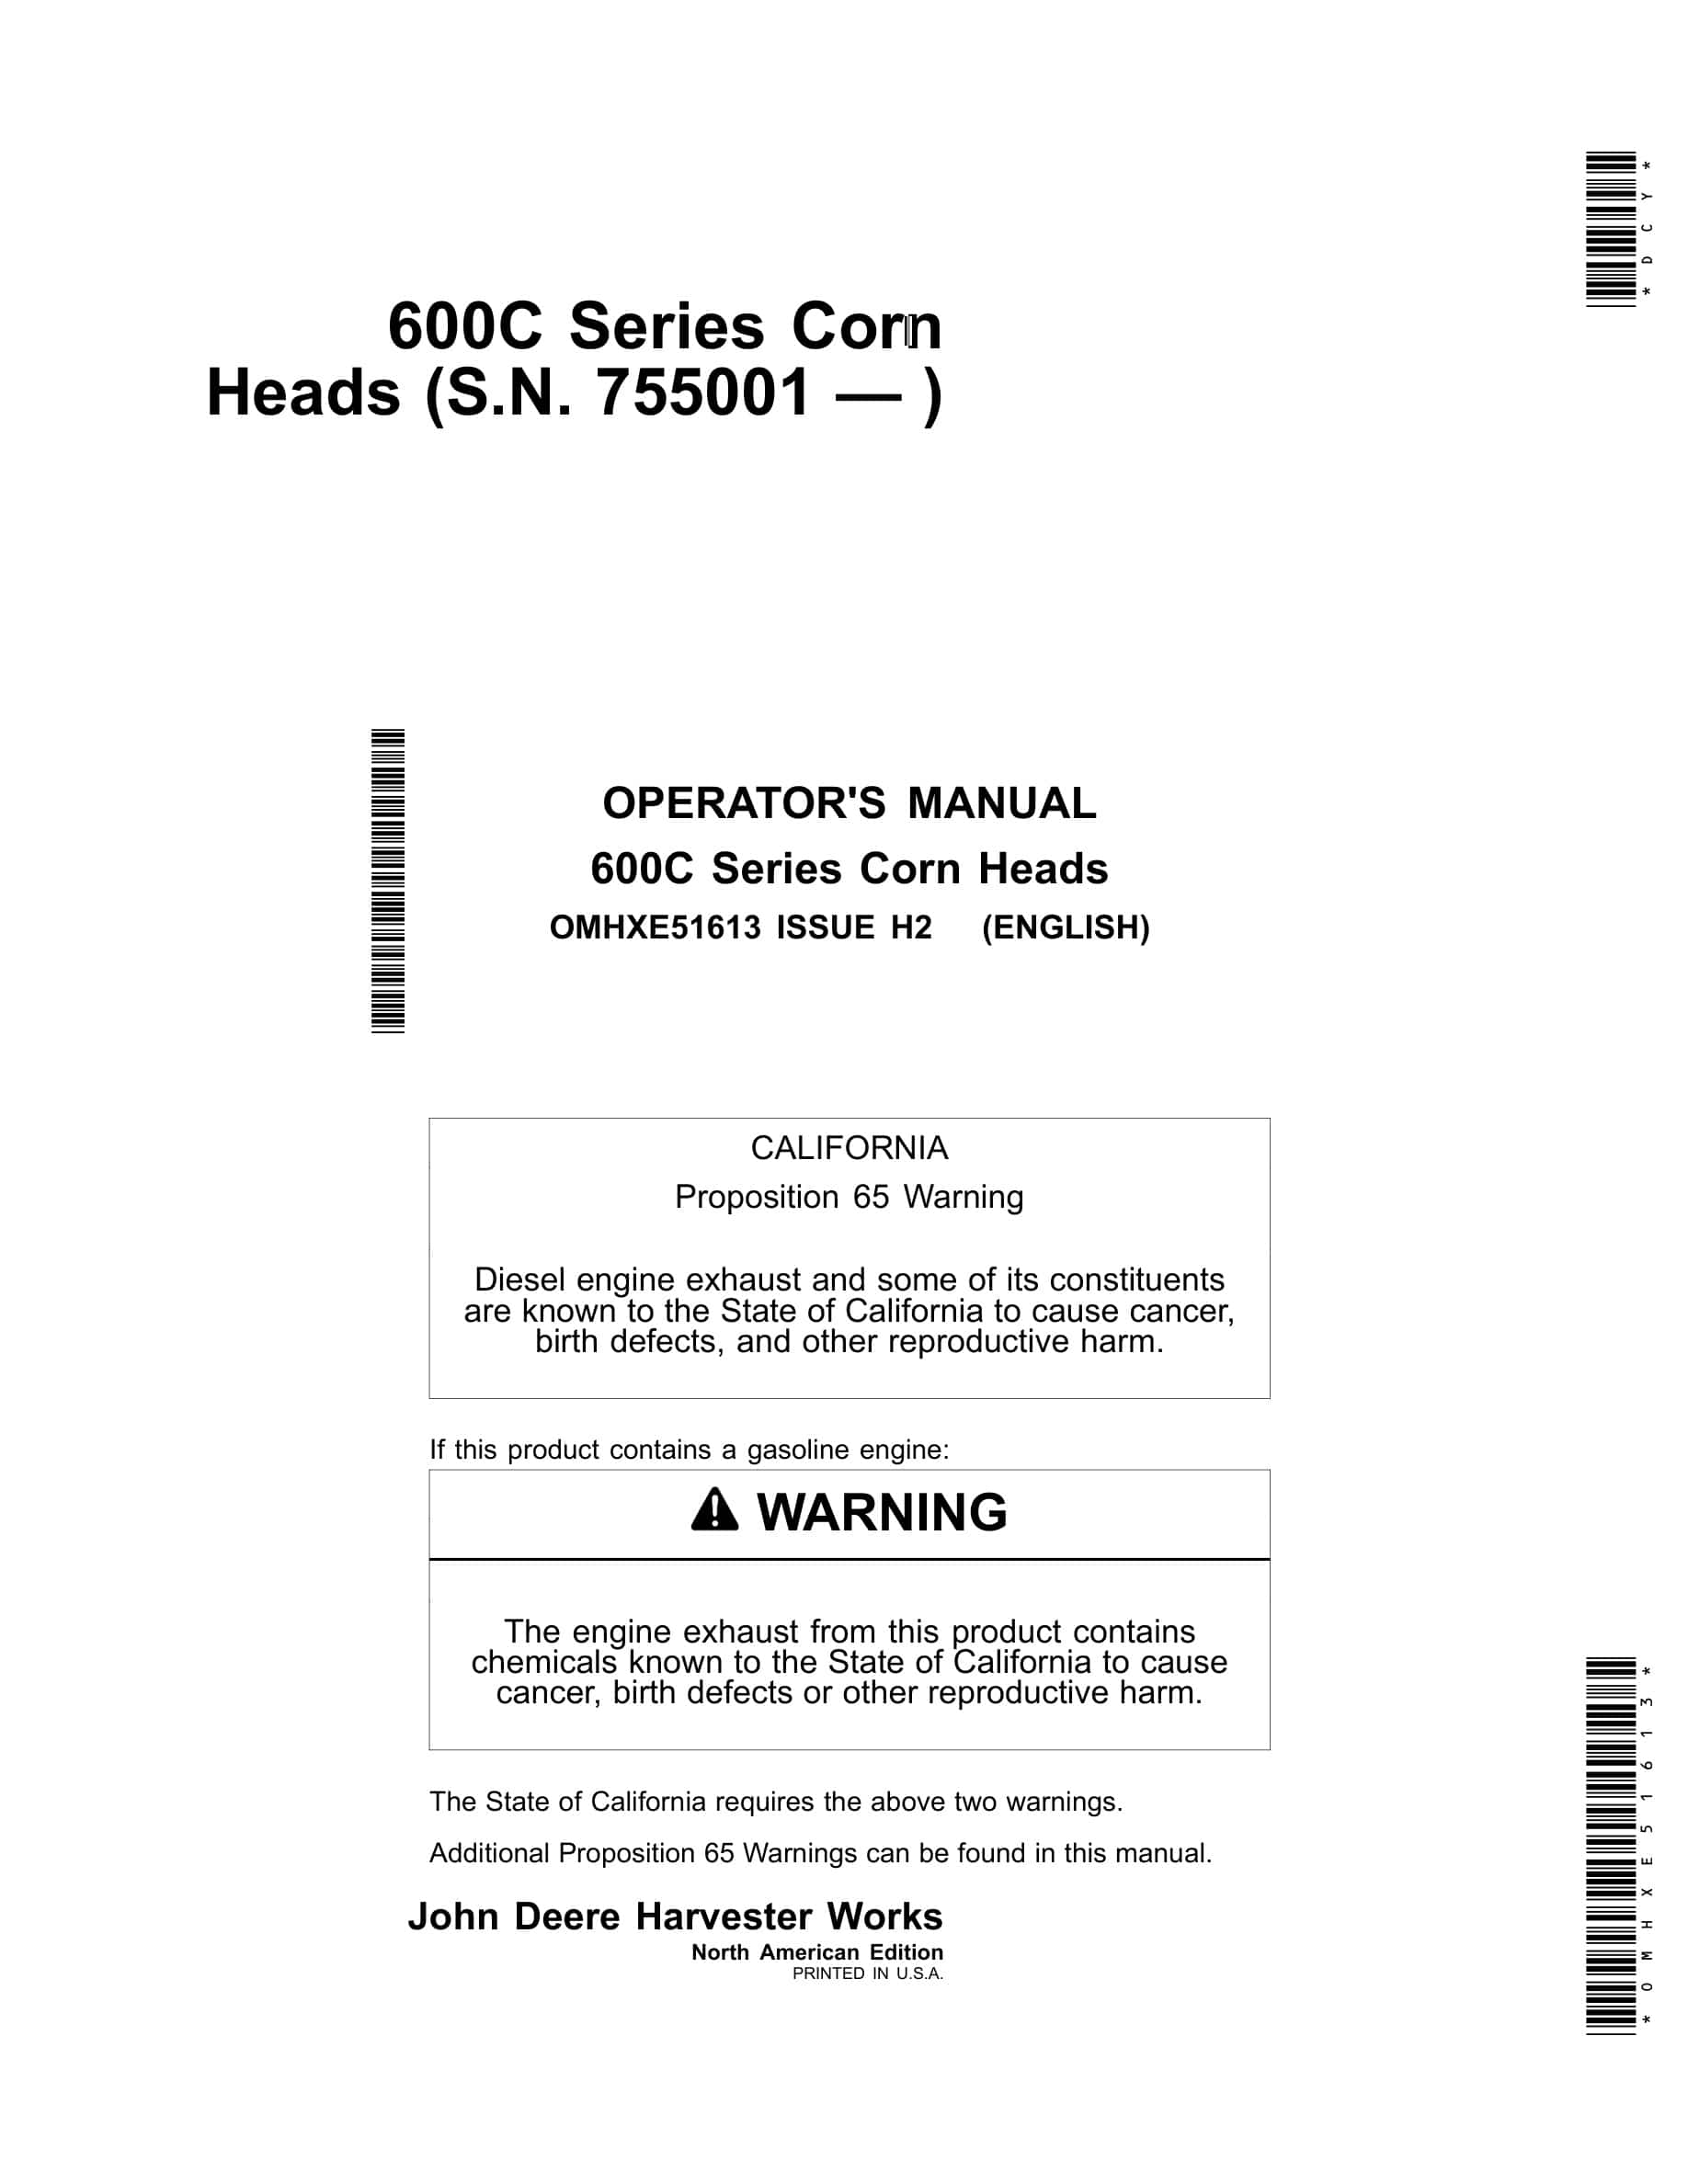 John Deere 600C Series Corn Heads Operator Manual OMHXE51613-1